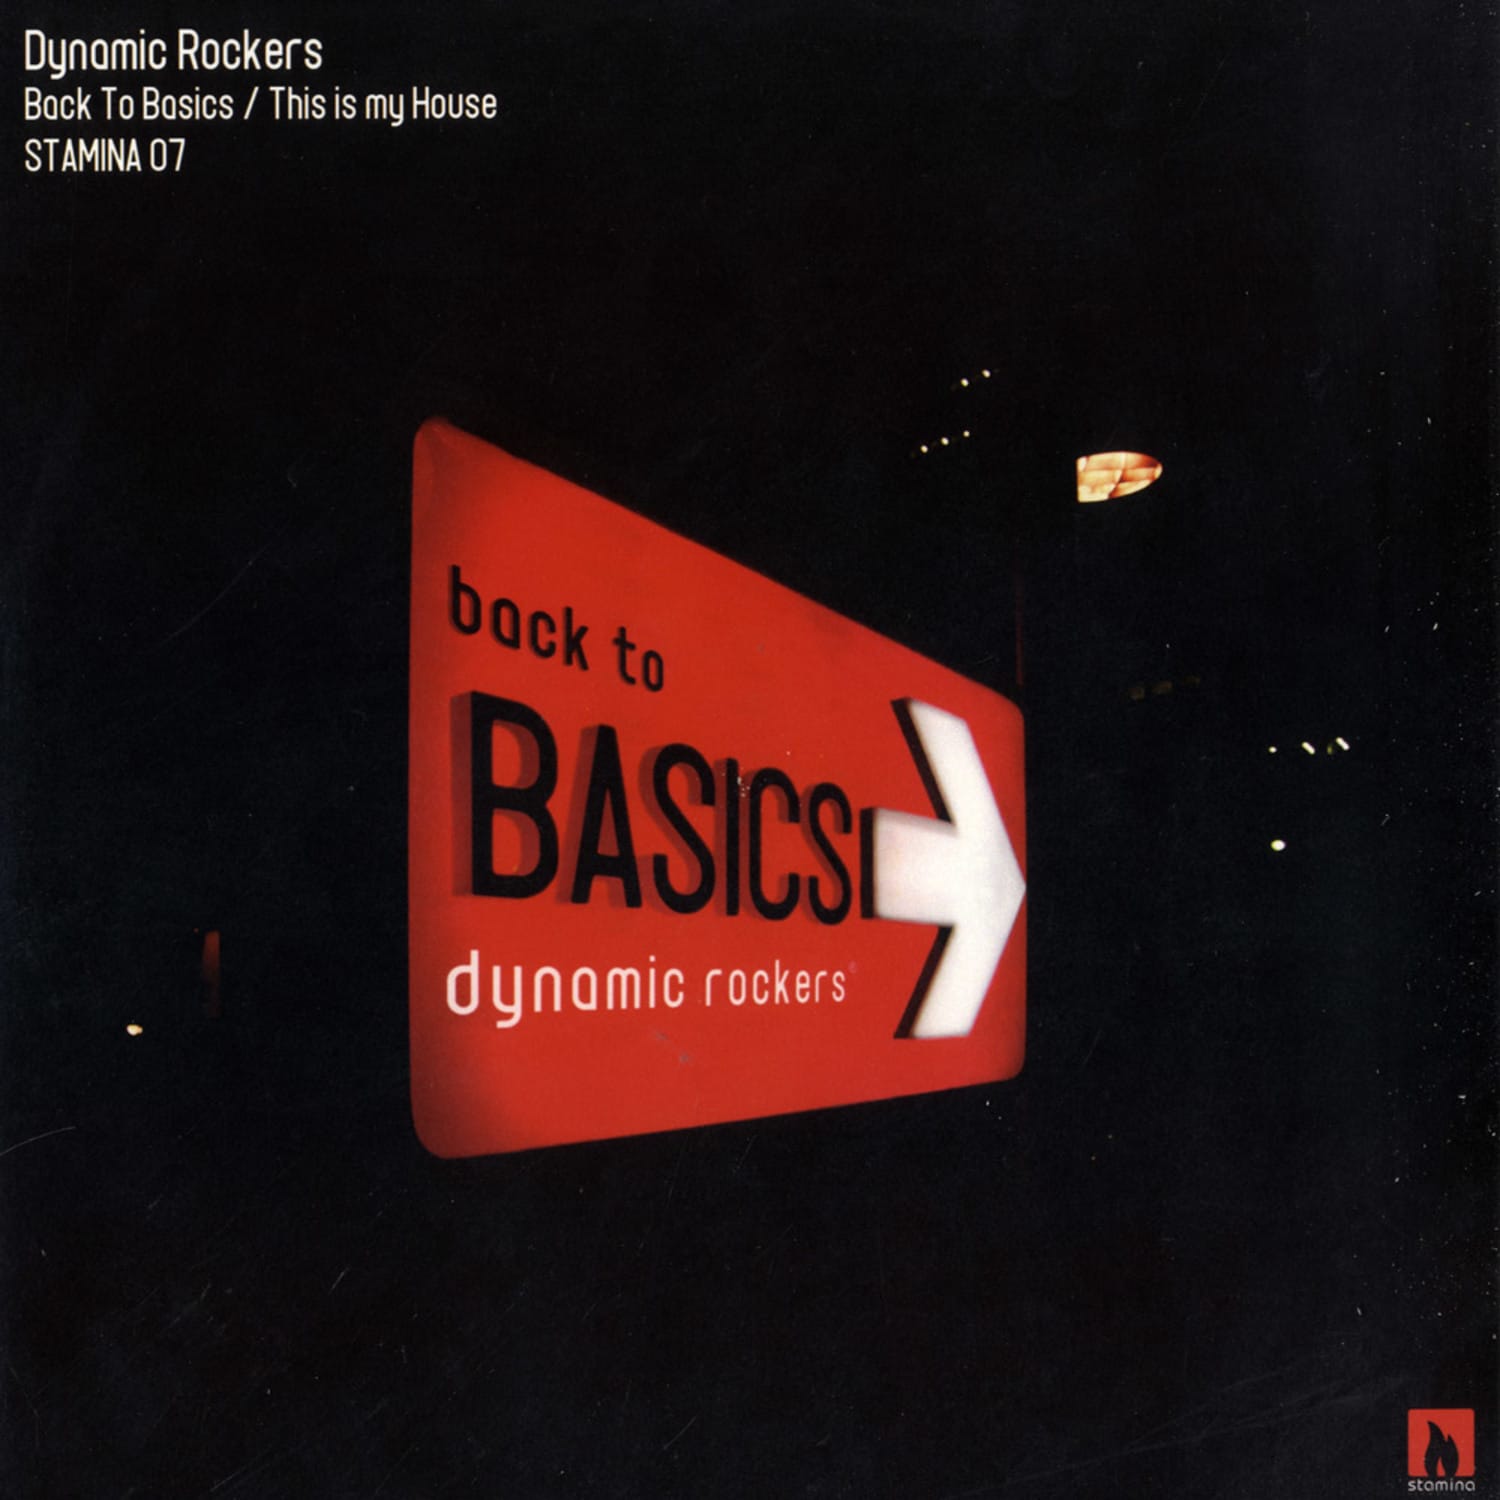 Dynamic Rockers - BACK TO BASICS